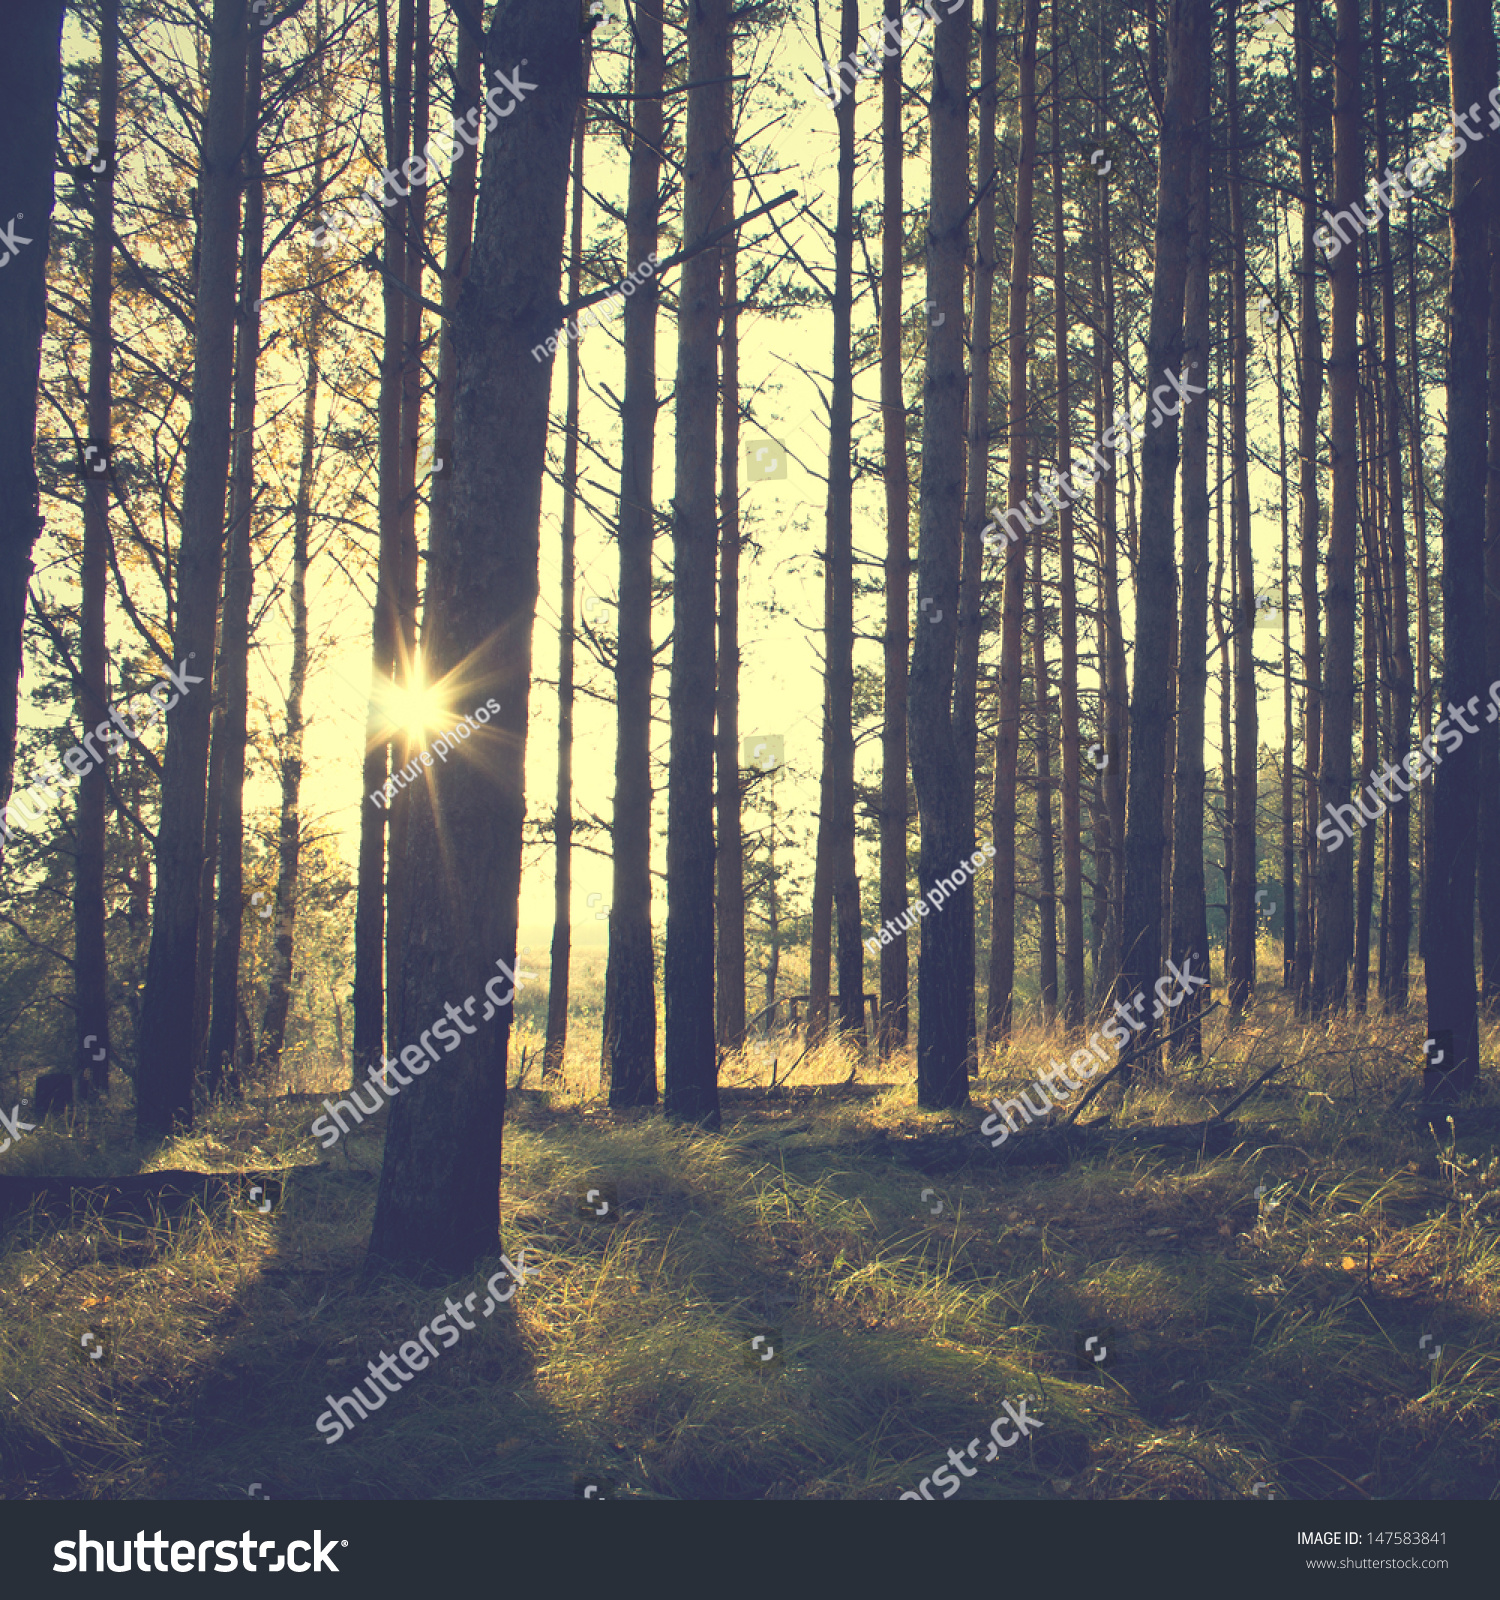 Vintage Forest Background Stock Photo 147583841 : Shutterstock